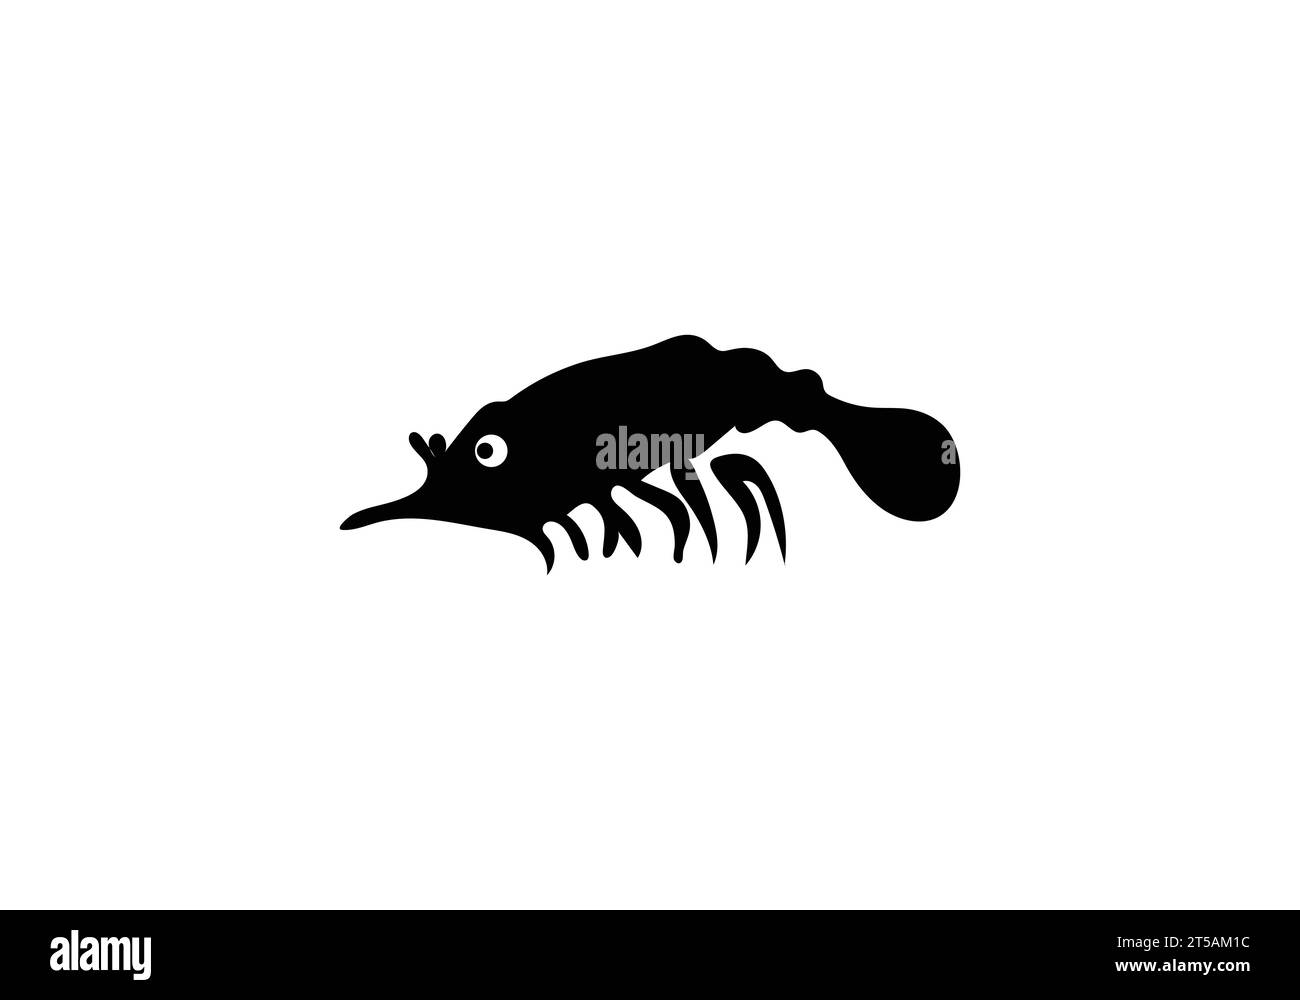 Minimalistisches Design mit Amano Shrimps-Symbol Stock Vektor